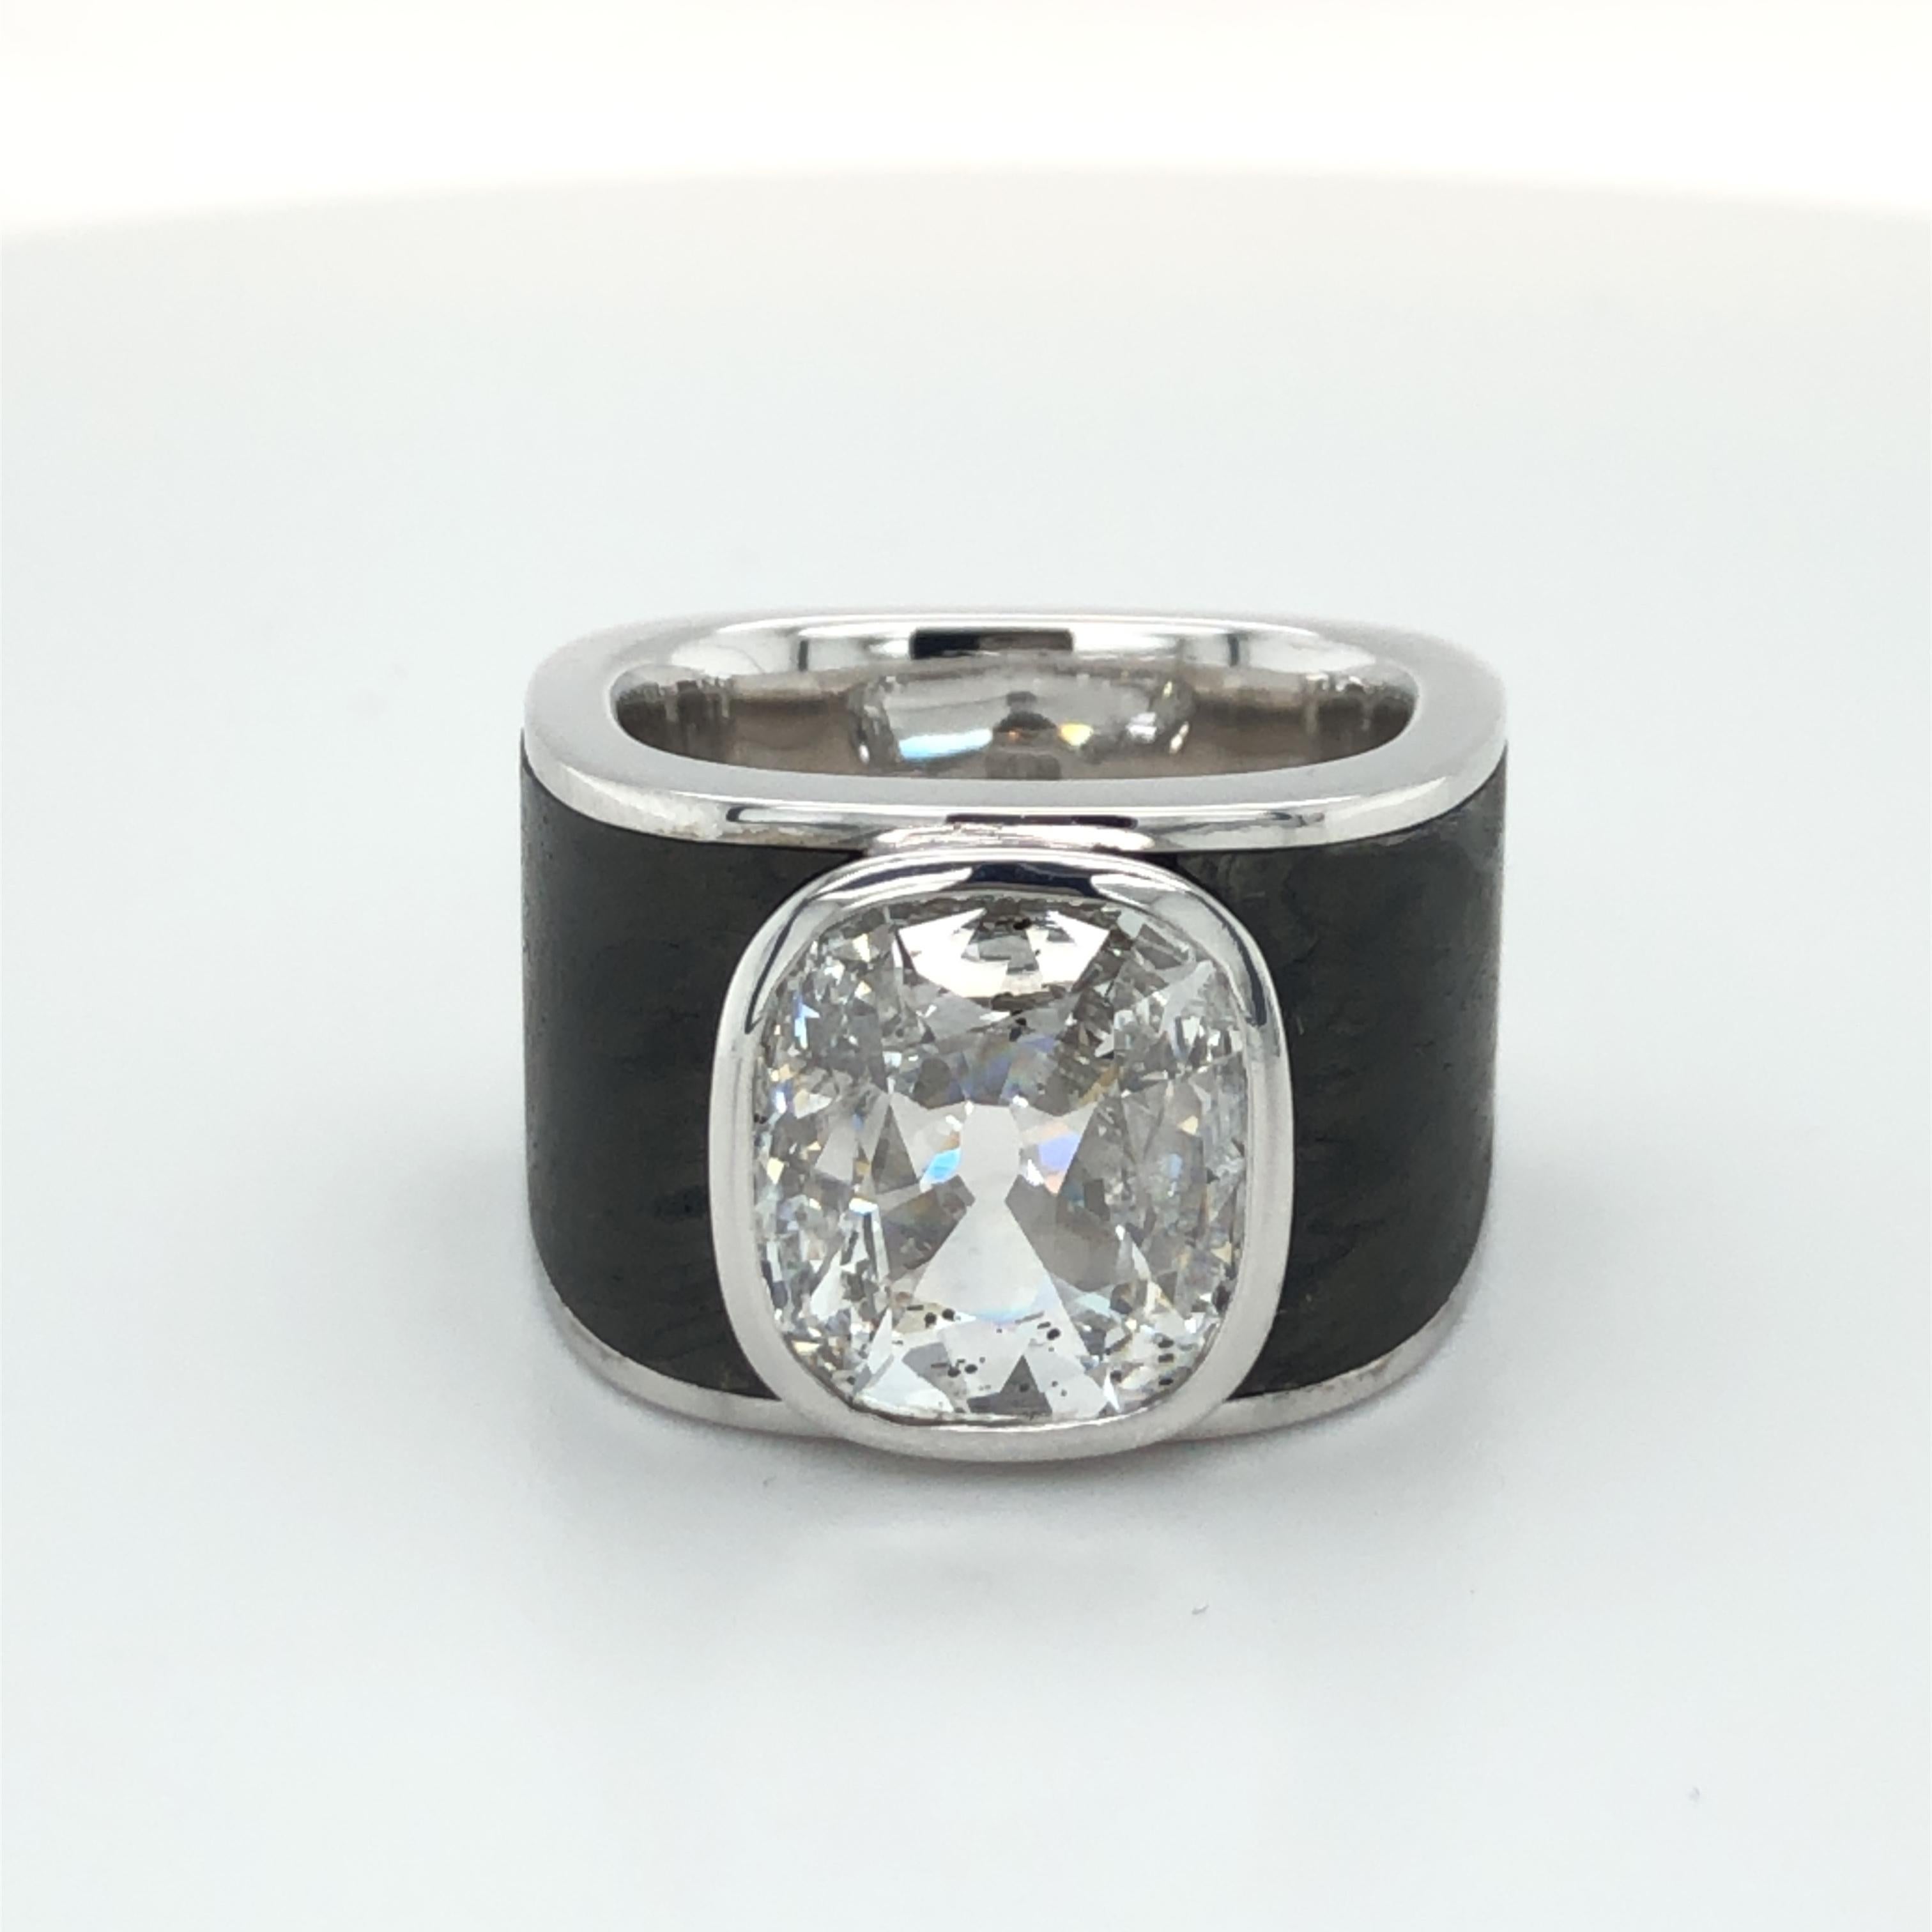 Contemporary Binder Moerisch 3.41 Carat Diamond Ring in 18 Karat White Gold and Carbon